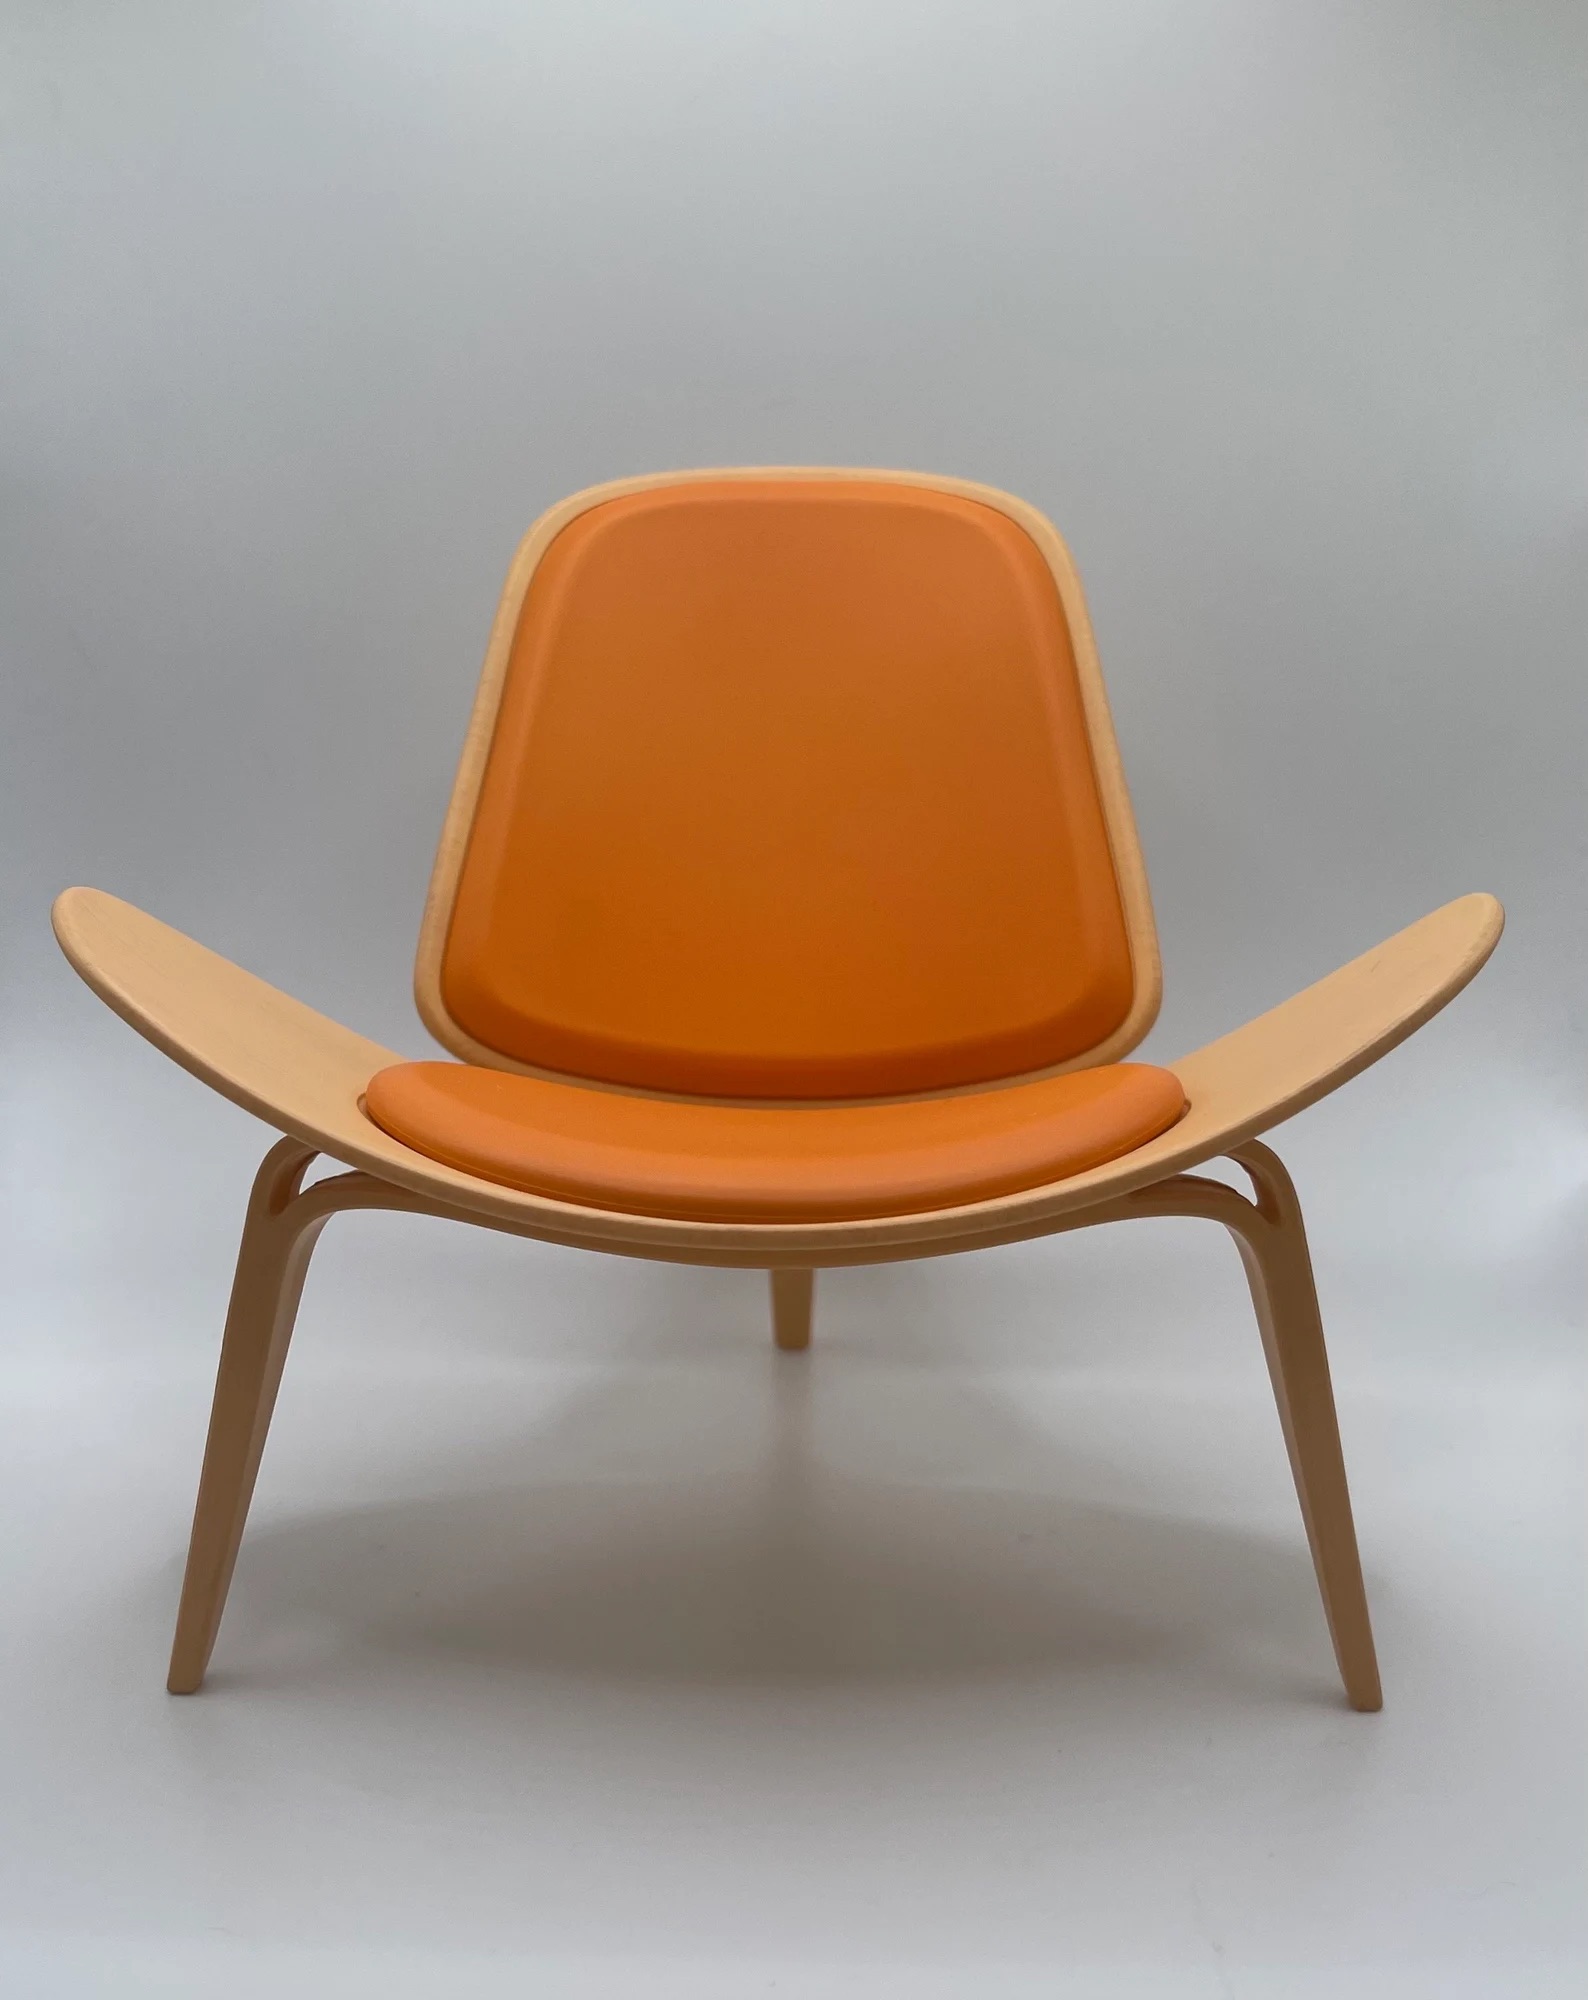 Three Hans Wegner Shell Chairs, Scale Model Desk Displays